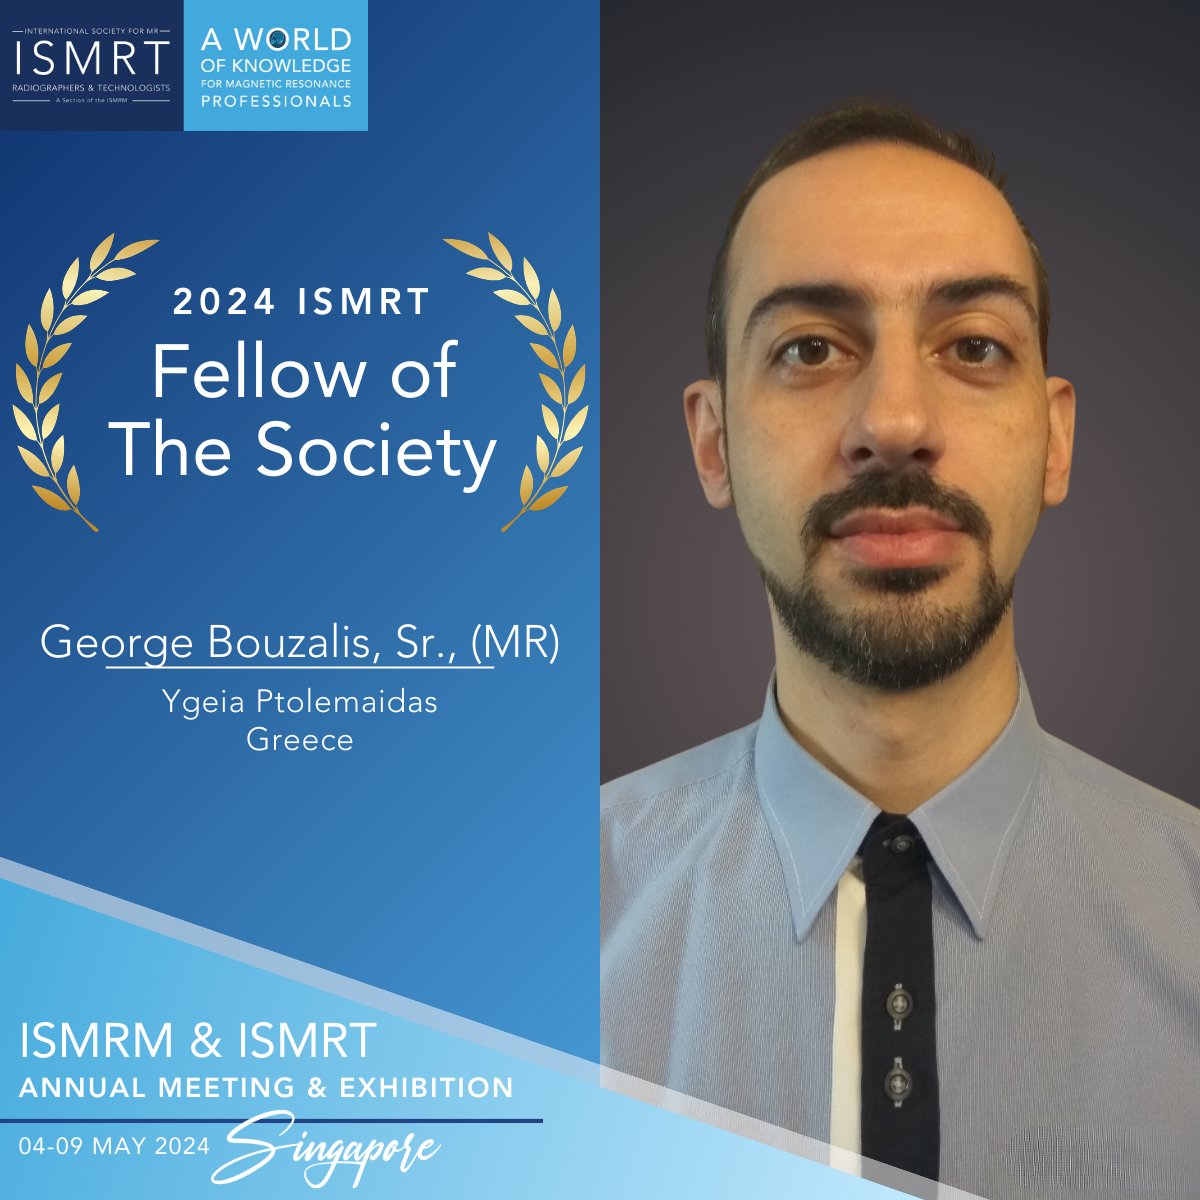 Congratulations again to 2024 ISMRT Fellow of the Society Award recipient, George Bouzalis, Sr., (MR)!

#ISMRT2024 #ISMRM2024 #ISMRT #ISMRM #MRI #MR #MagneticResonance #Singapore